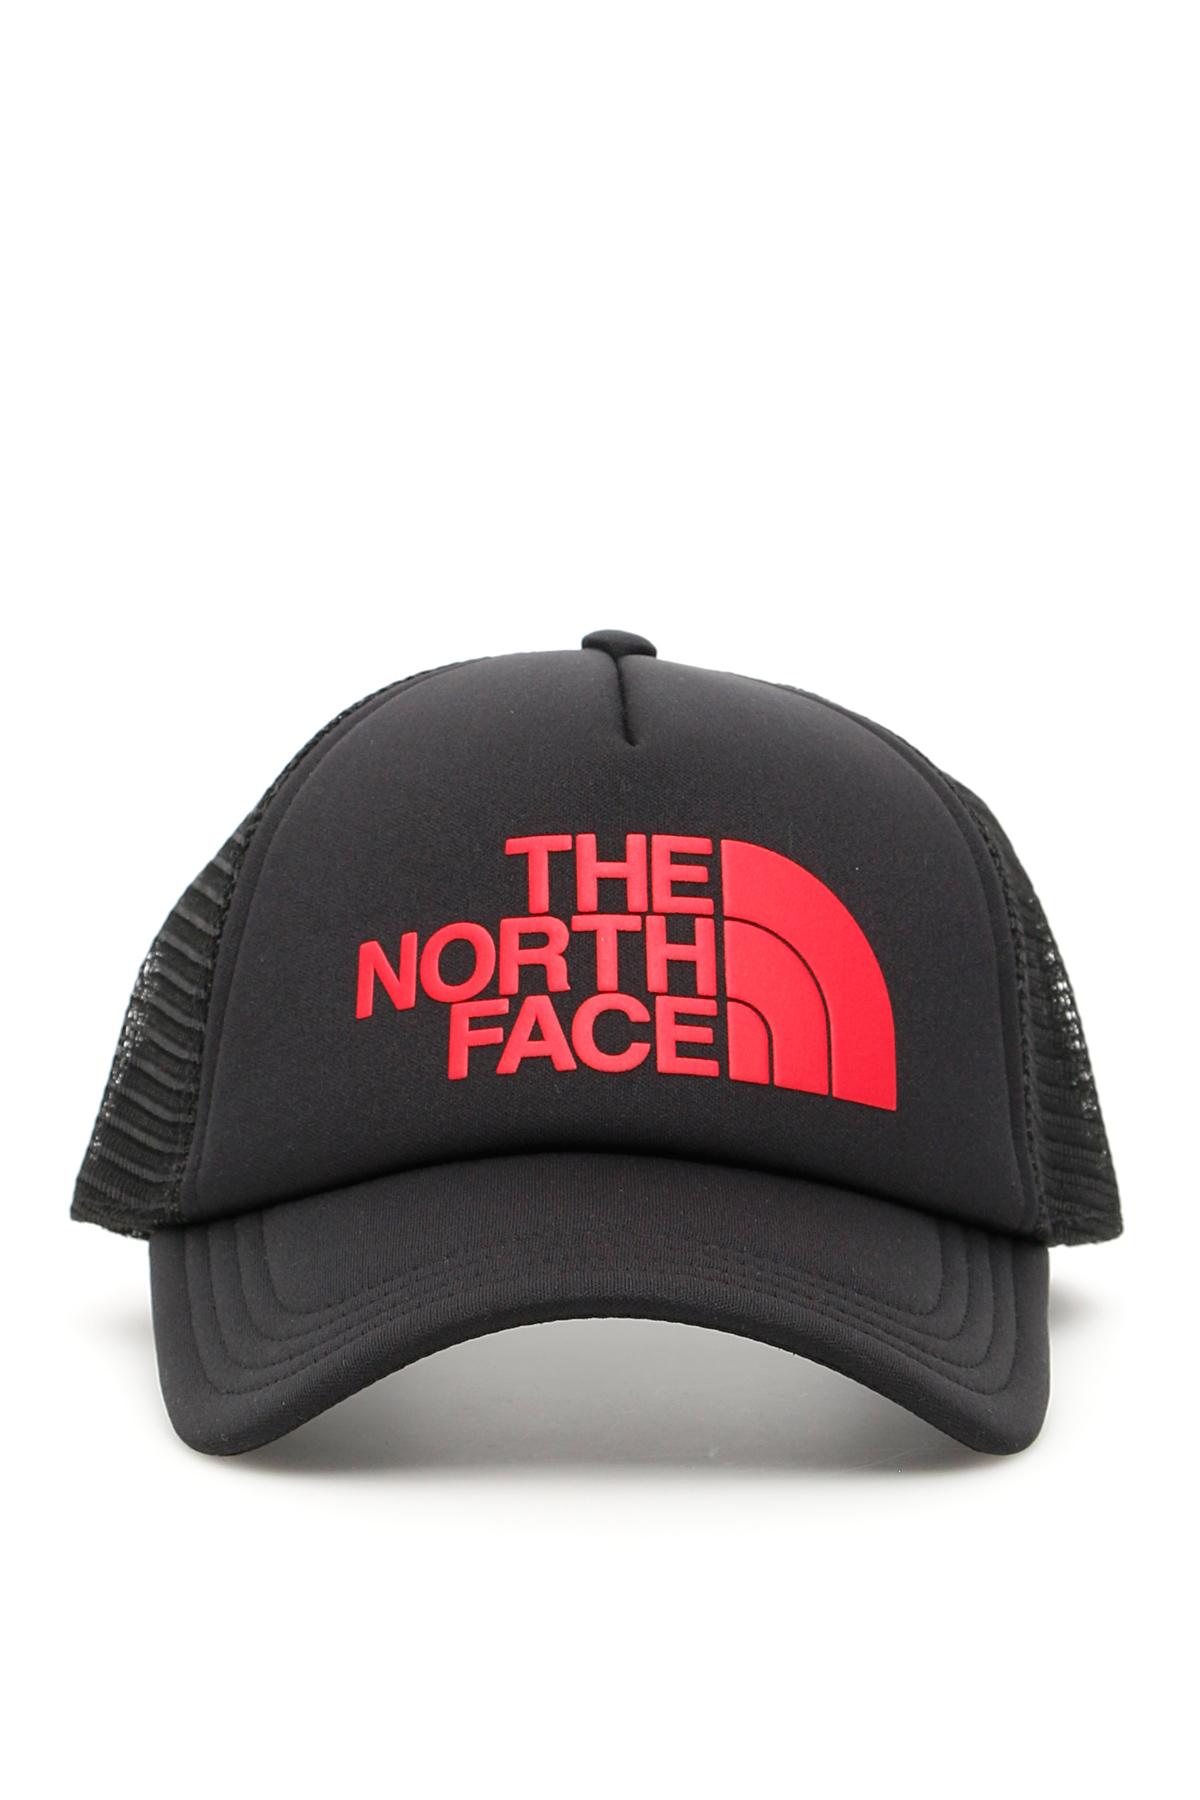 The North Face Trucker Logo Cap in Black for Men - Lyst